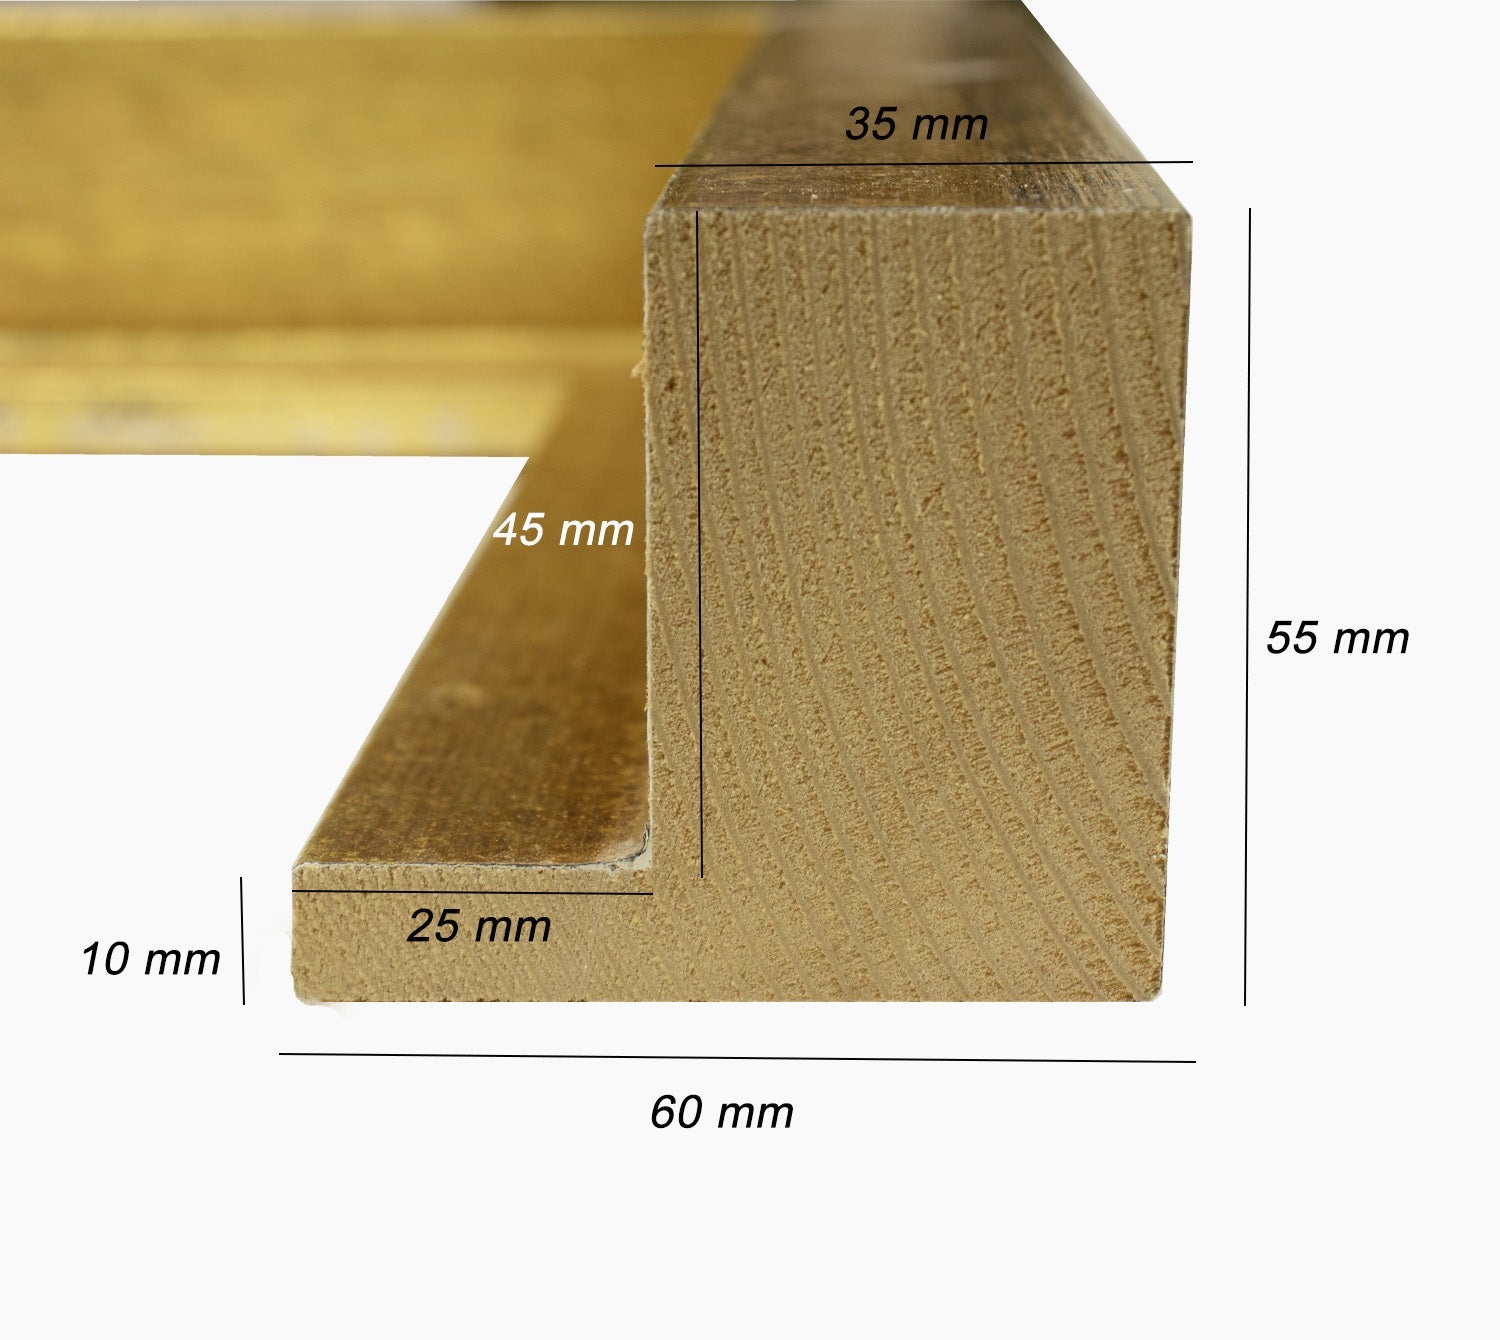 605.300 cadre en bois a la feuille d'or mesure de profil 60x55 mm Lombarda cornici S.n.c.